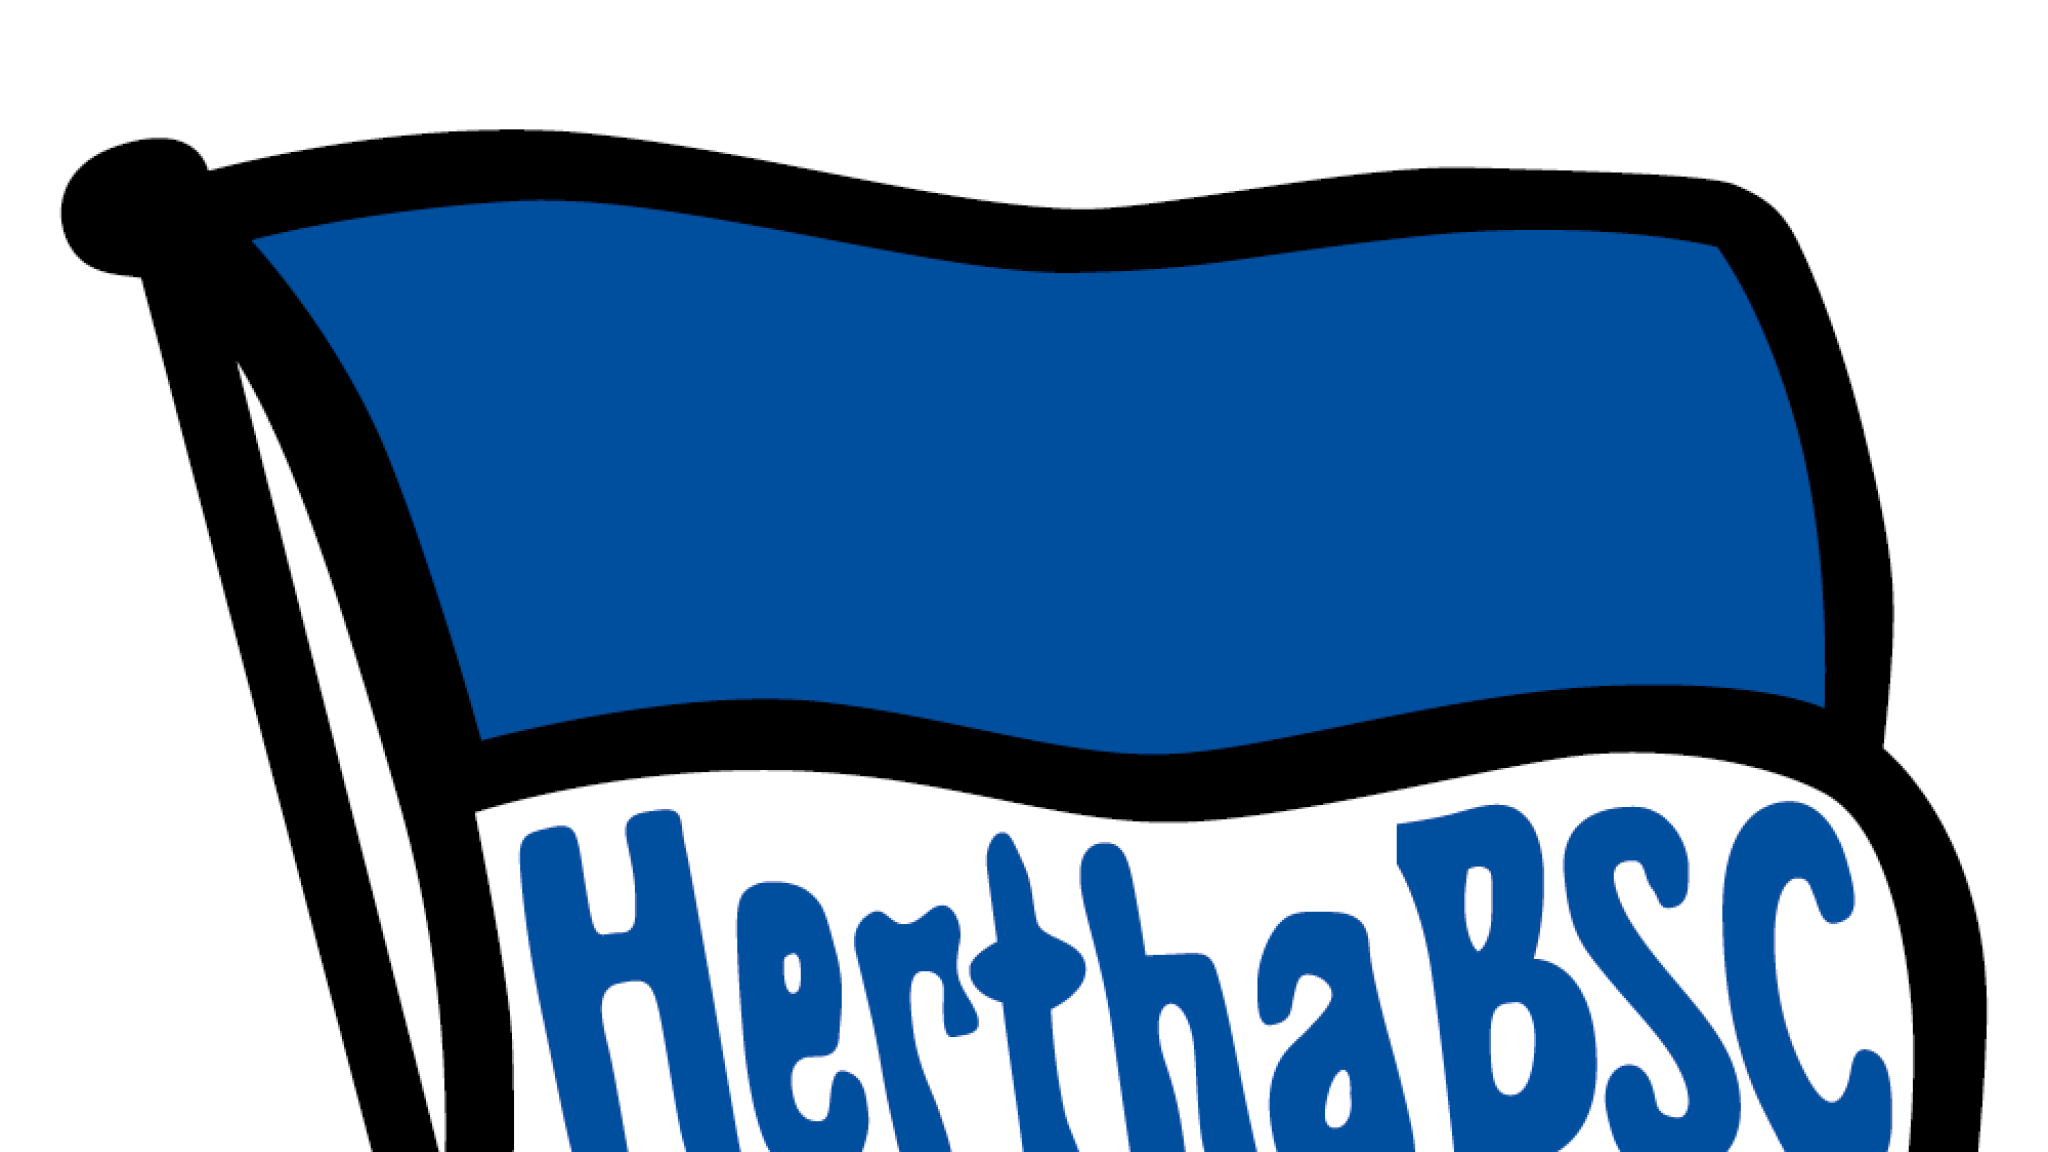 Hertha Bsc Wallpapers